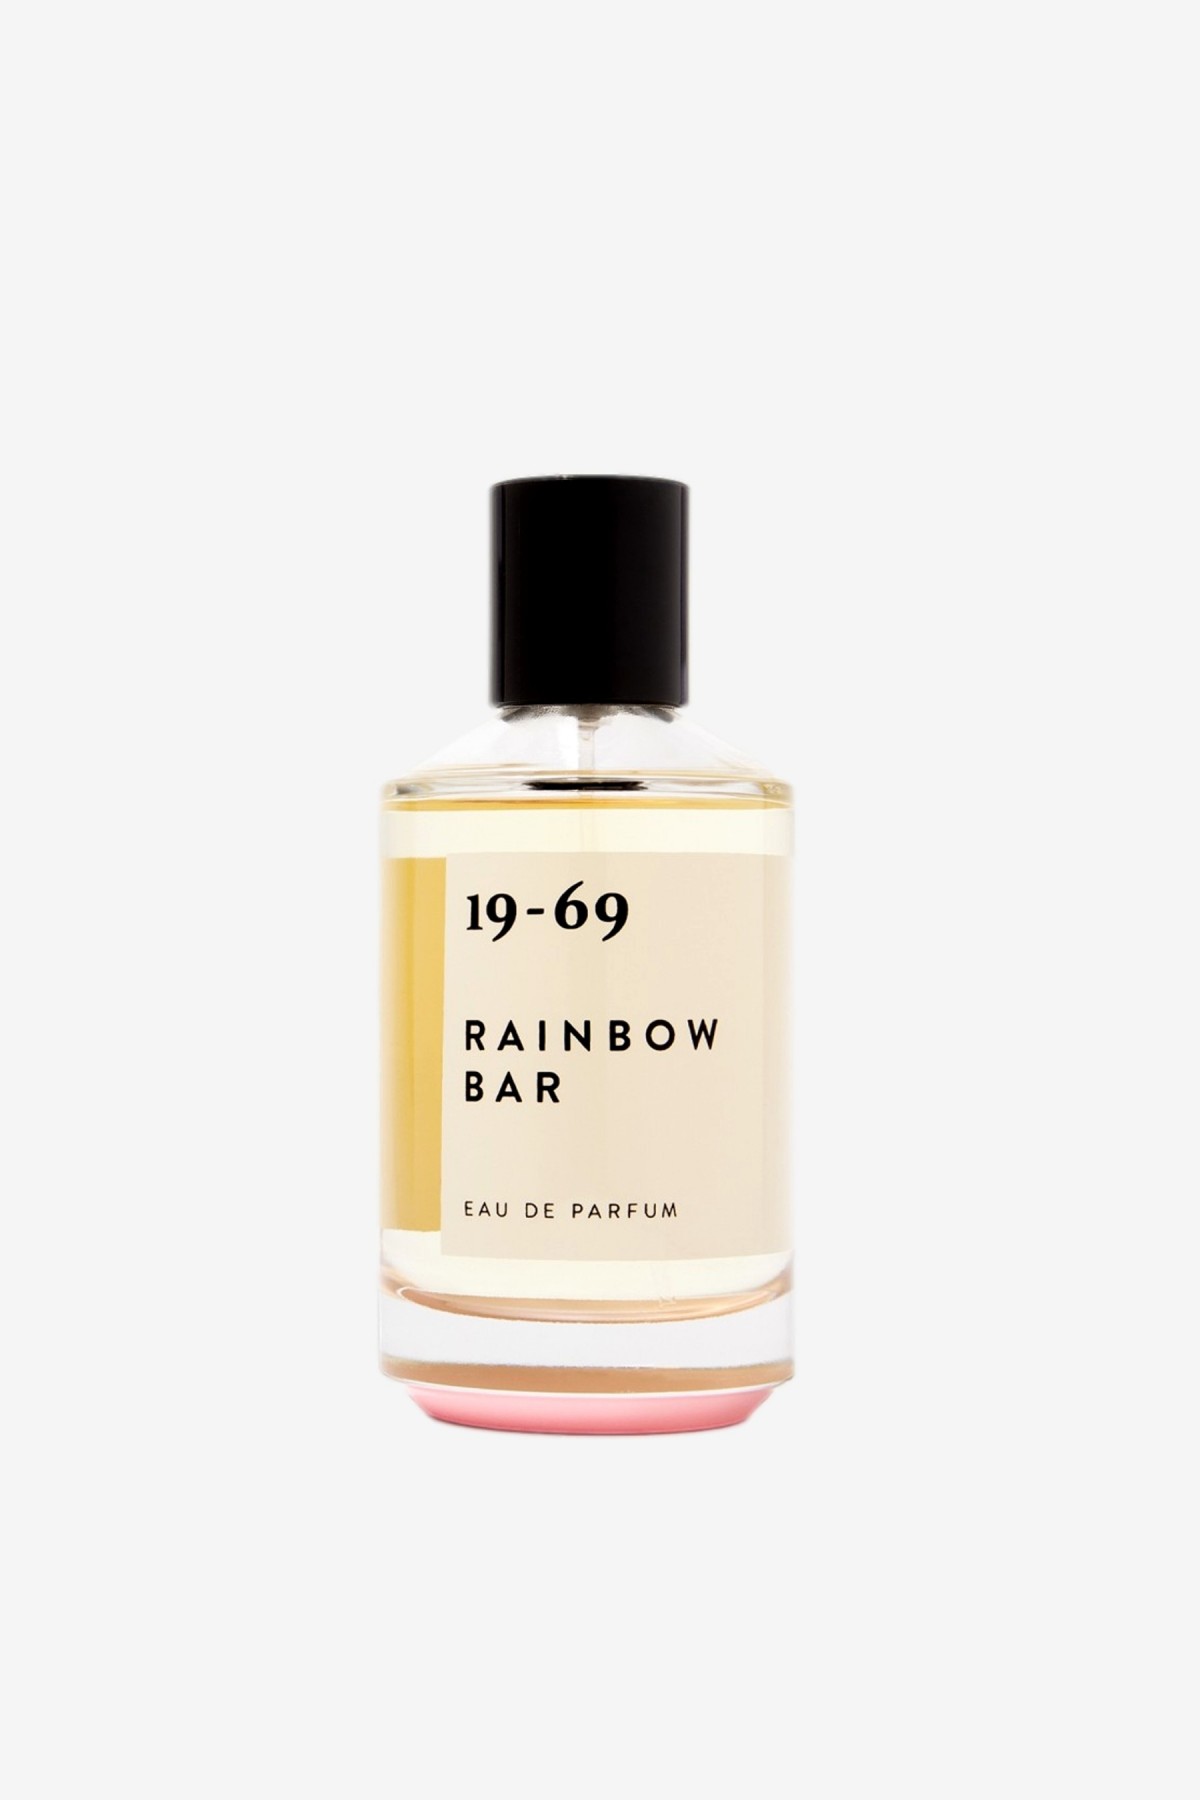 19-69 Rainbow Bar Eau de Parfum in 100ml